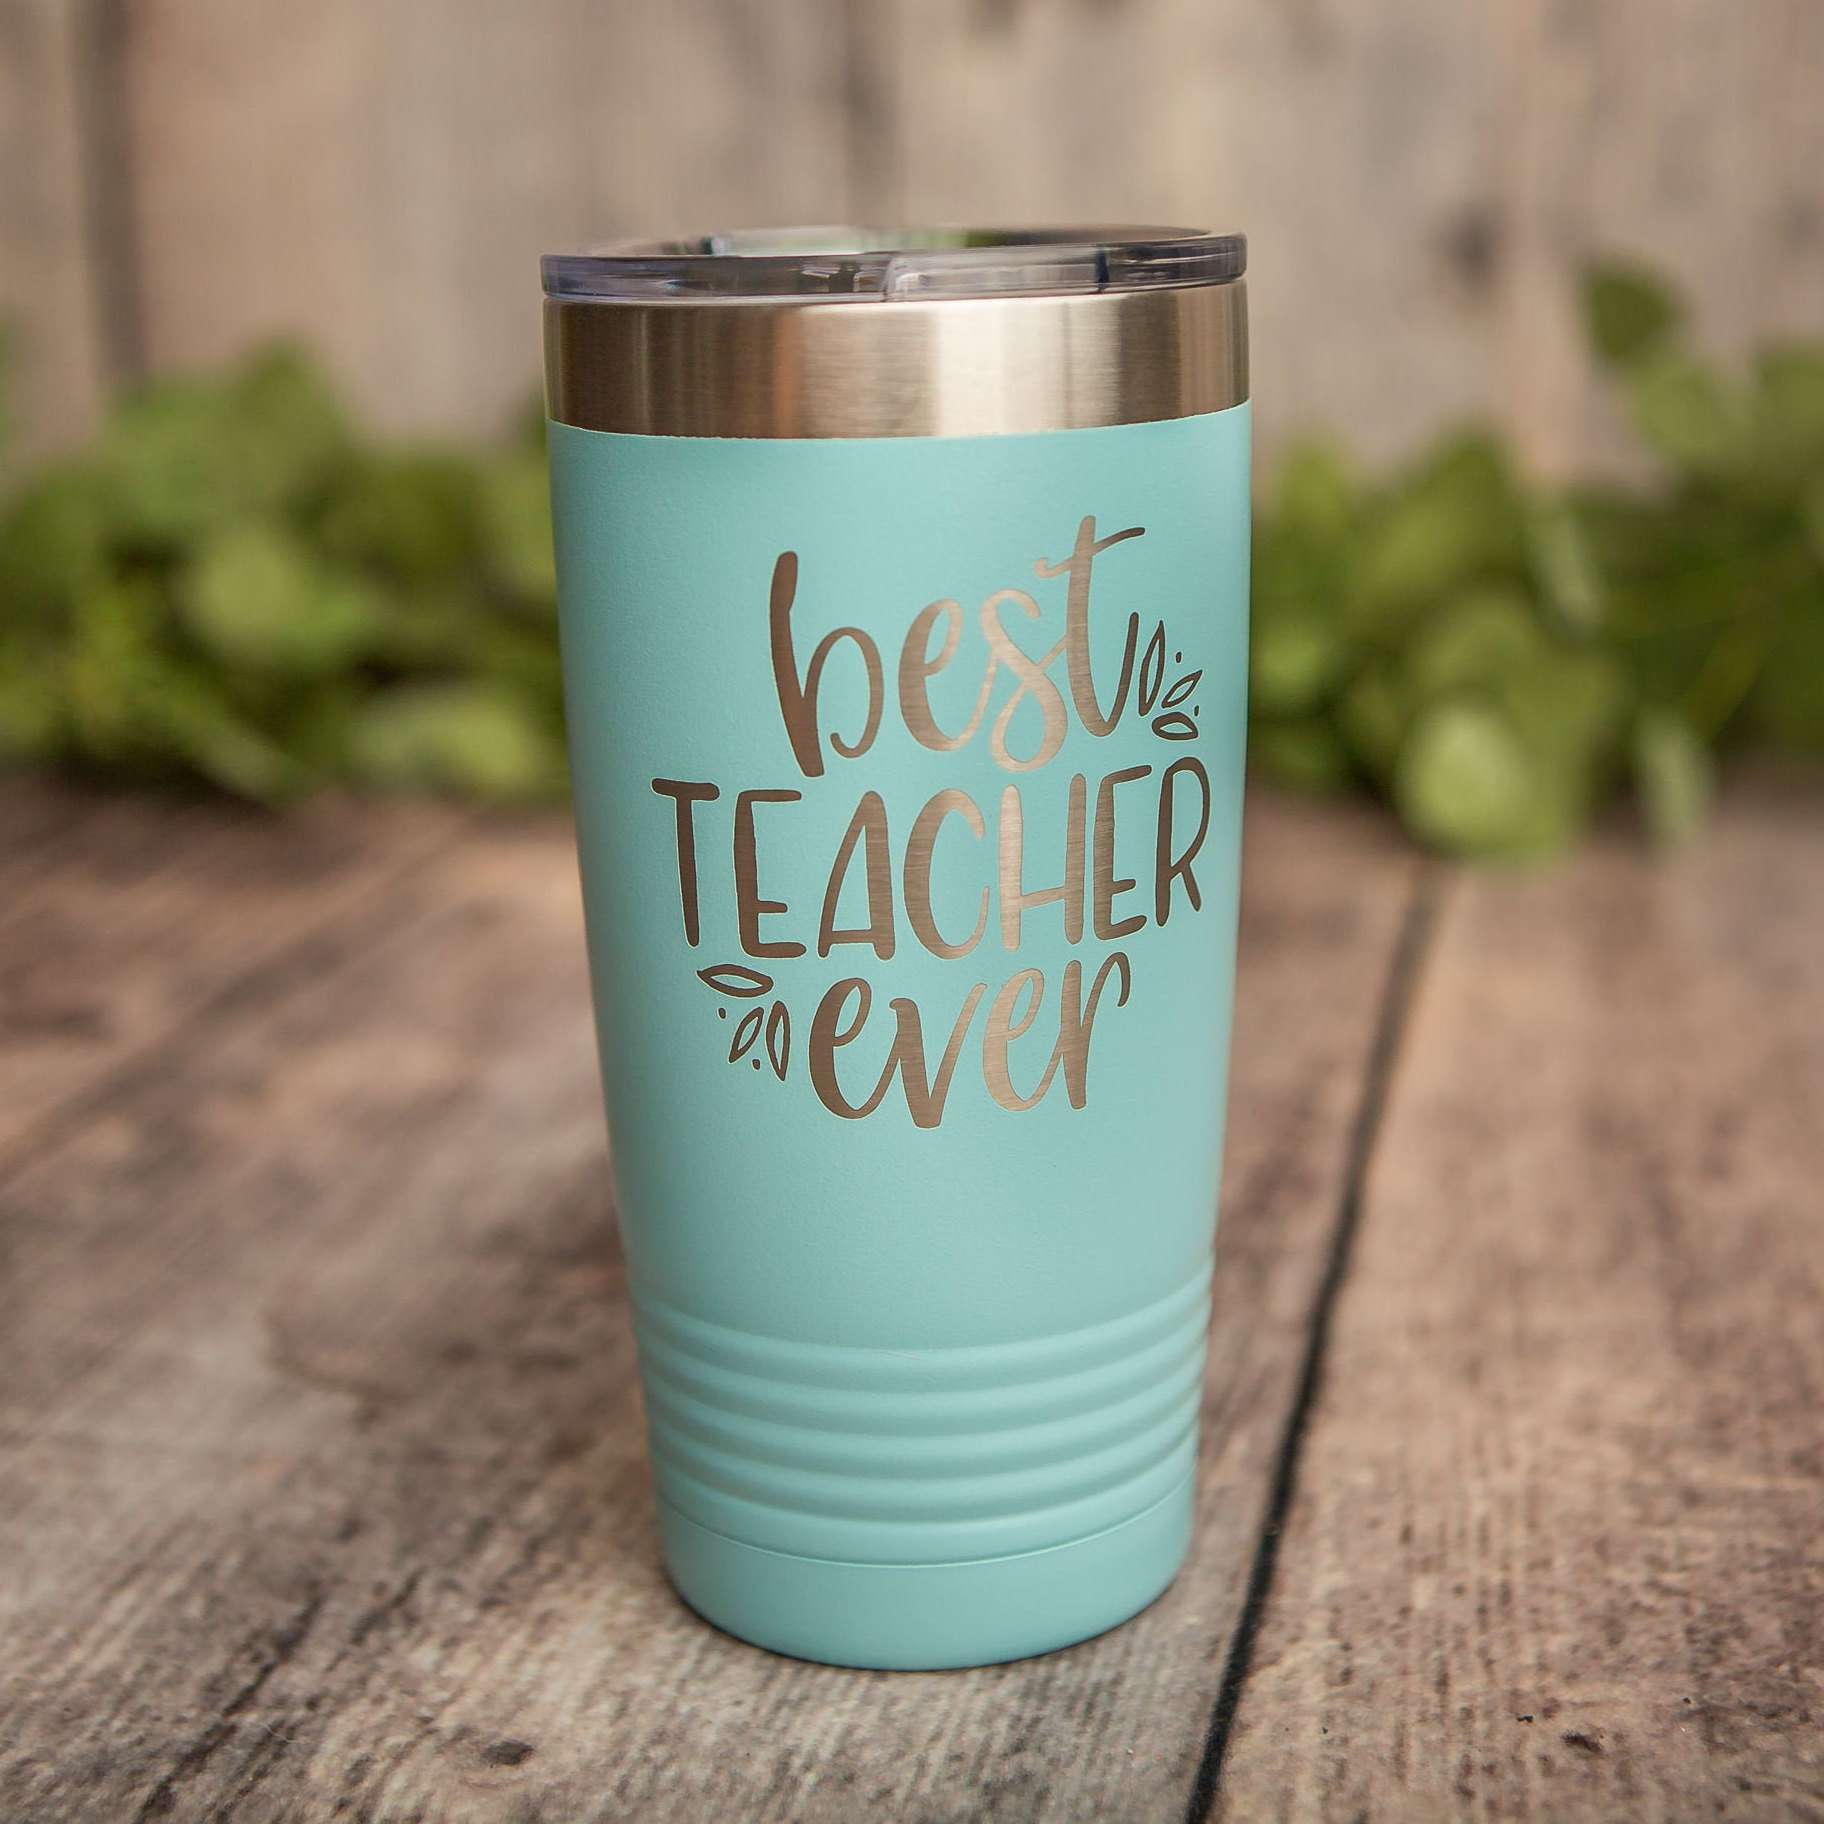 https://3cetching.com/wp-content/uploads/2020/09/best-teacher-ever-engraved-teaching-tumbler-gift-stainless-cup-teacher-appreciation-gift-5f5fbfaa.jpg